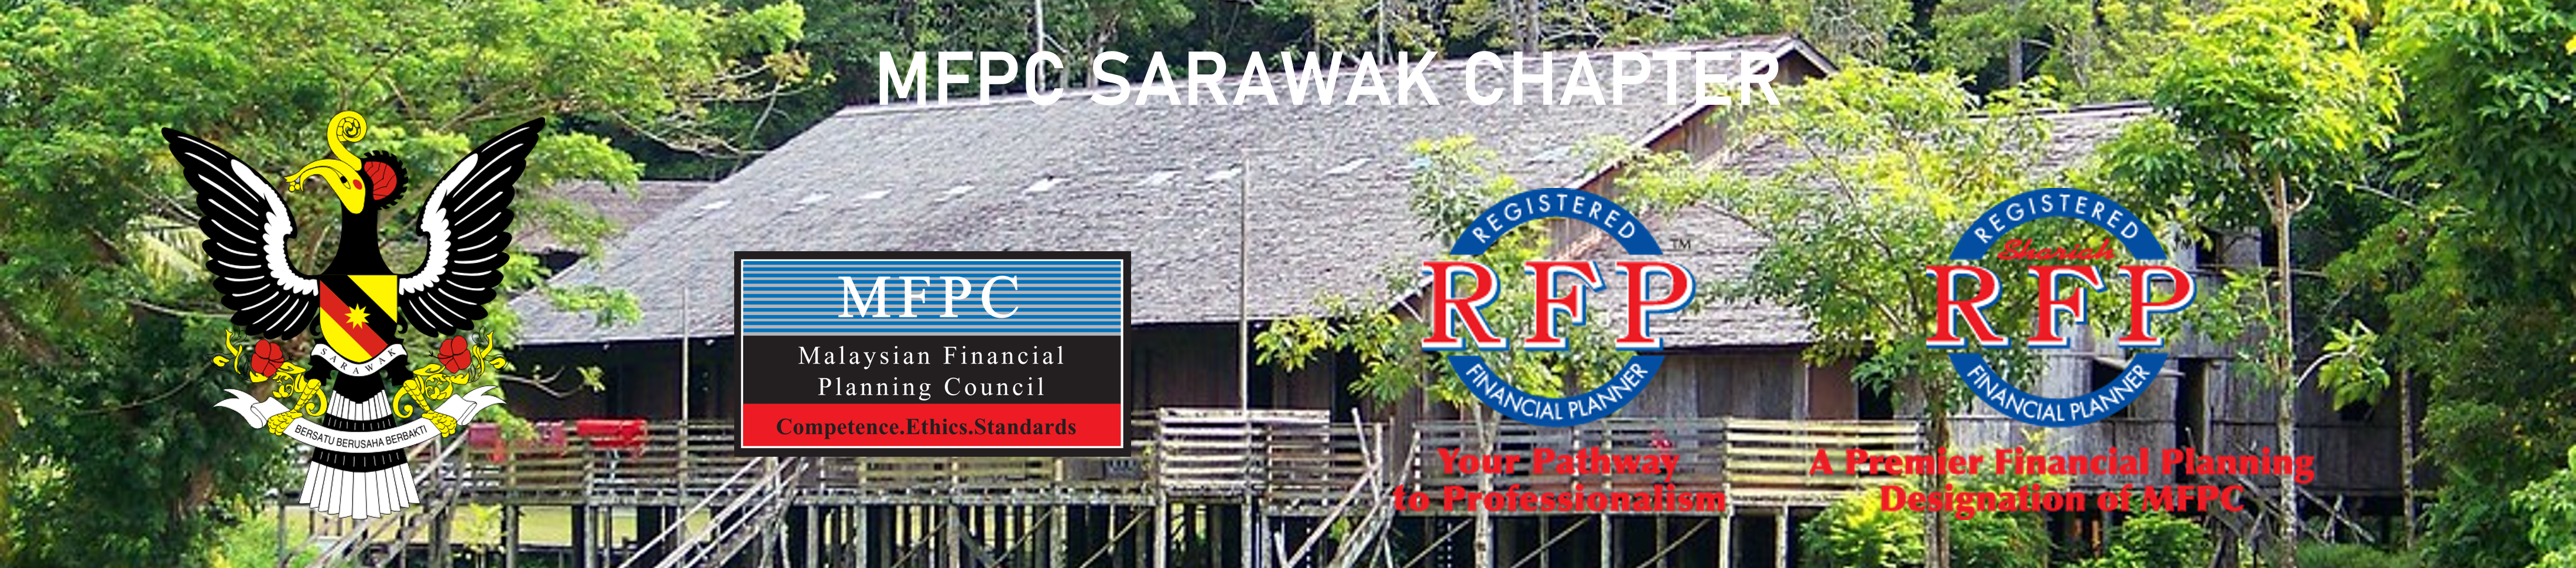 Sarawak Banner